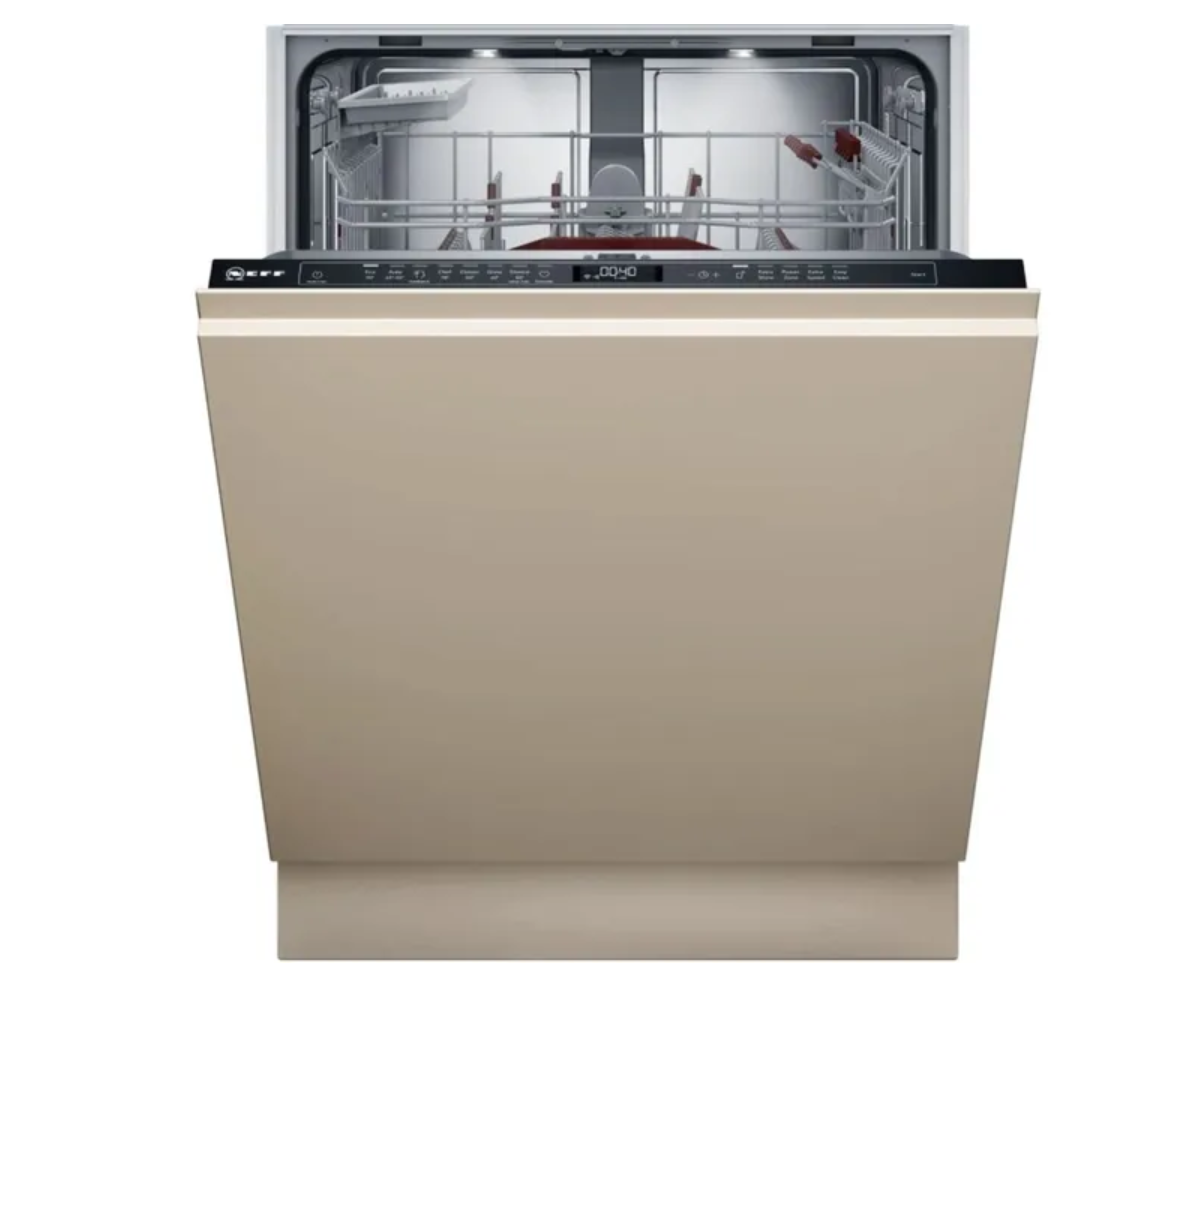 Встраиваемая посудомоечная машина Neff S157ZB801E встраиваемая посудомоечная машина neff s255ecx11e